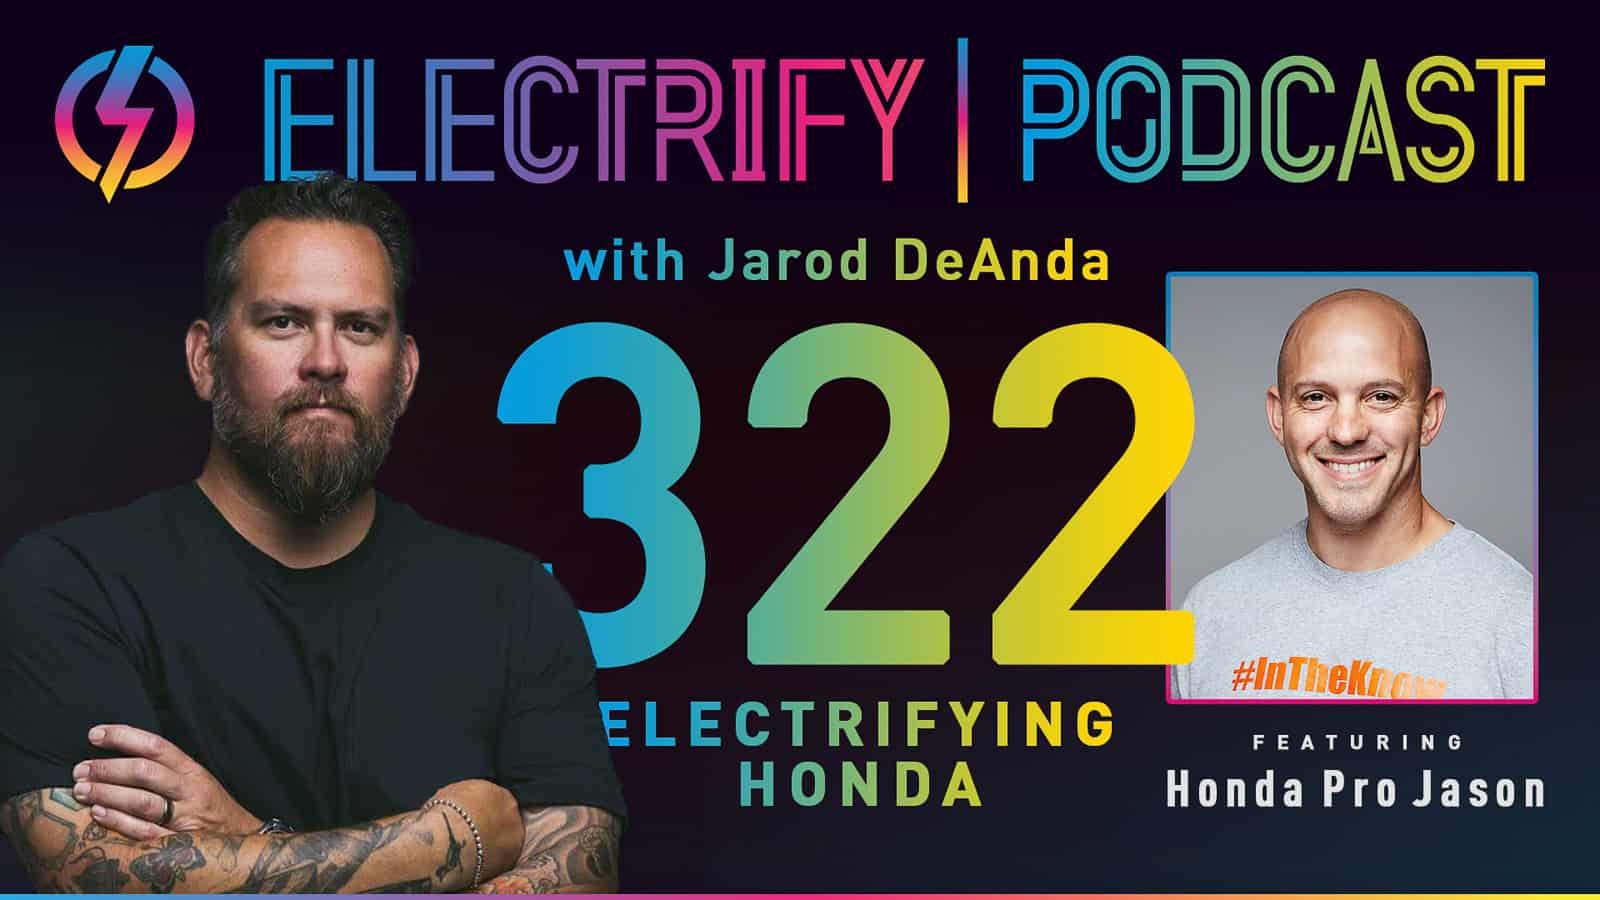 Promotional image for Electrify Podcast Episode 322 with host Jarod DeAnda and guest Honda Pro Jason, titled Electrifying Honda